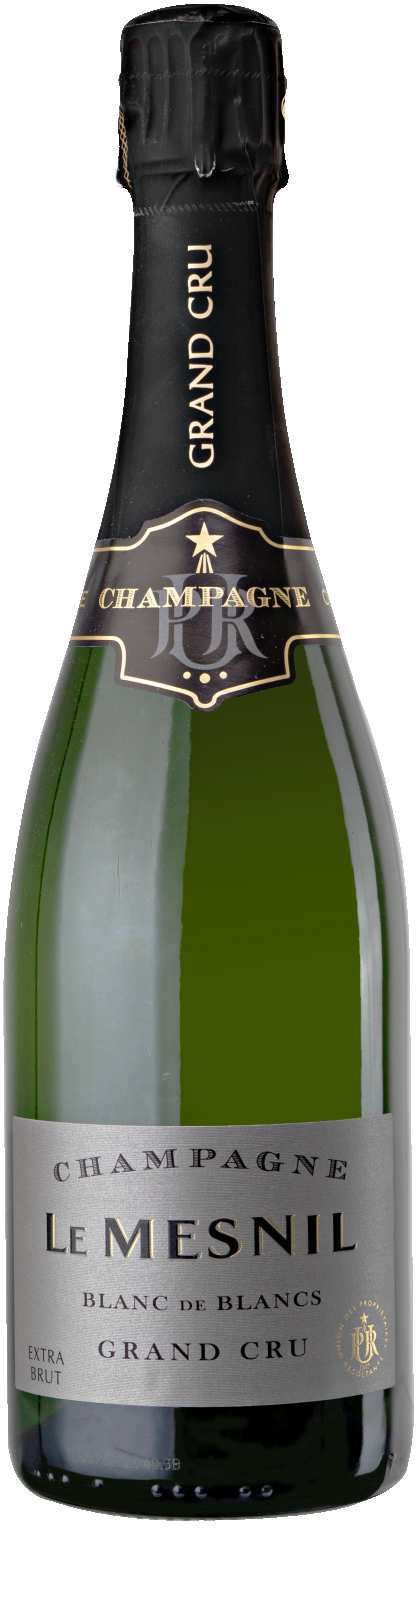 Productfoto Champagne Le Mesnil Blanc de Blancs Extra Brut